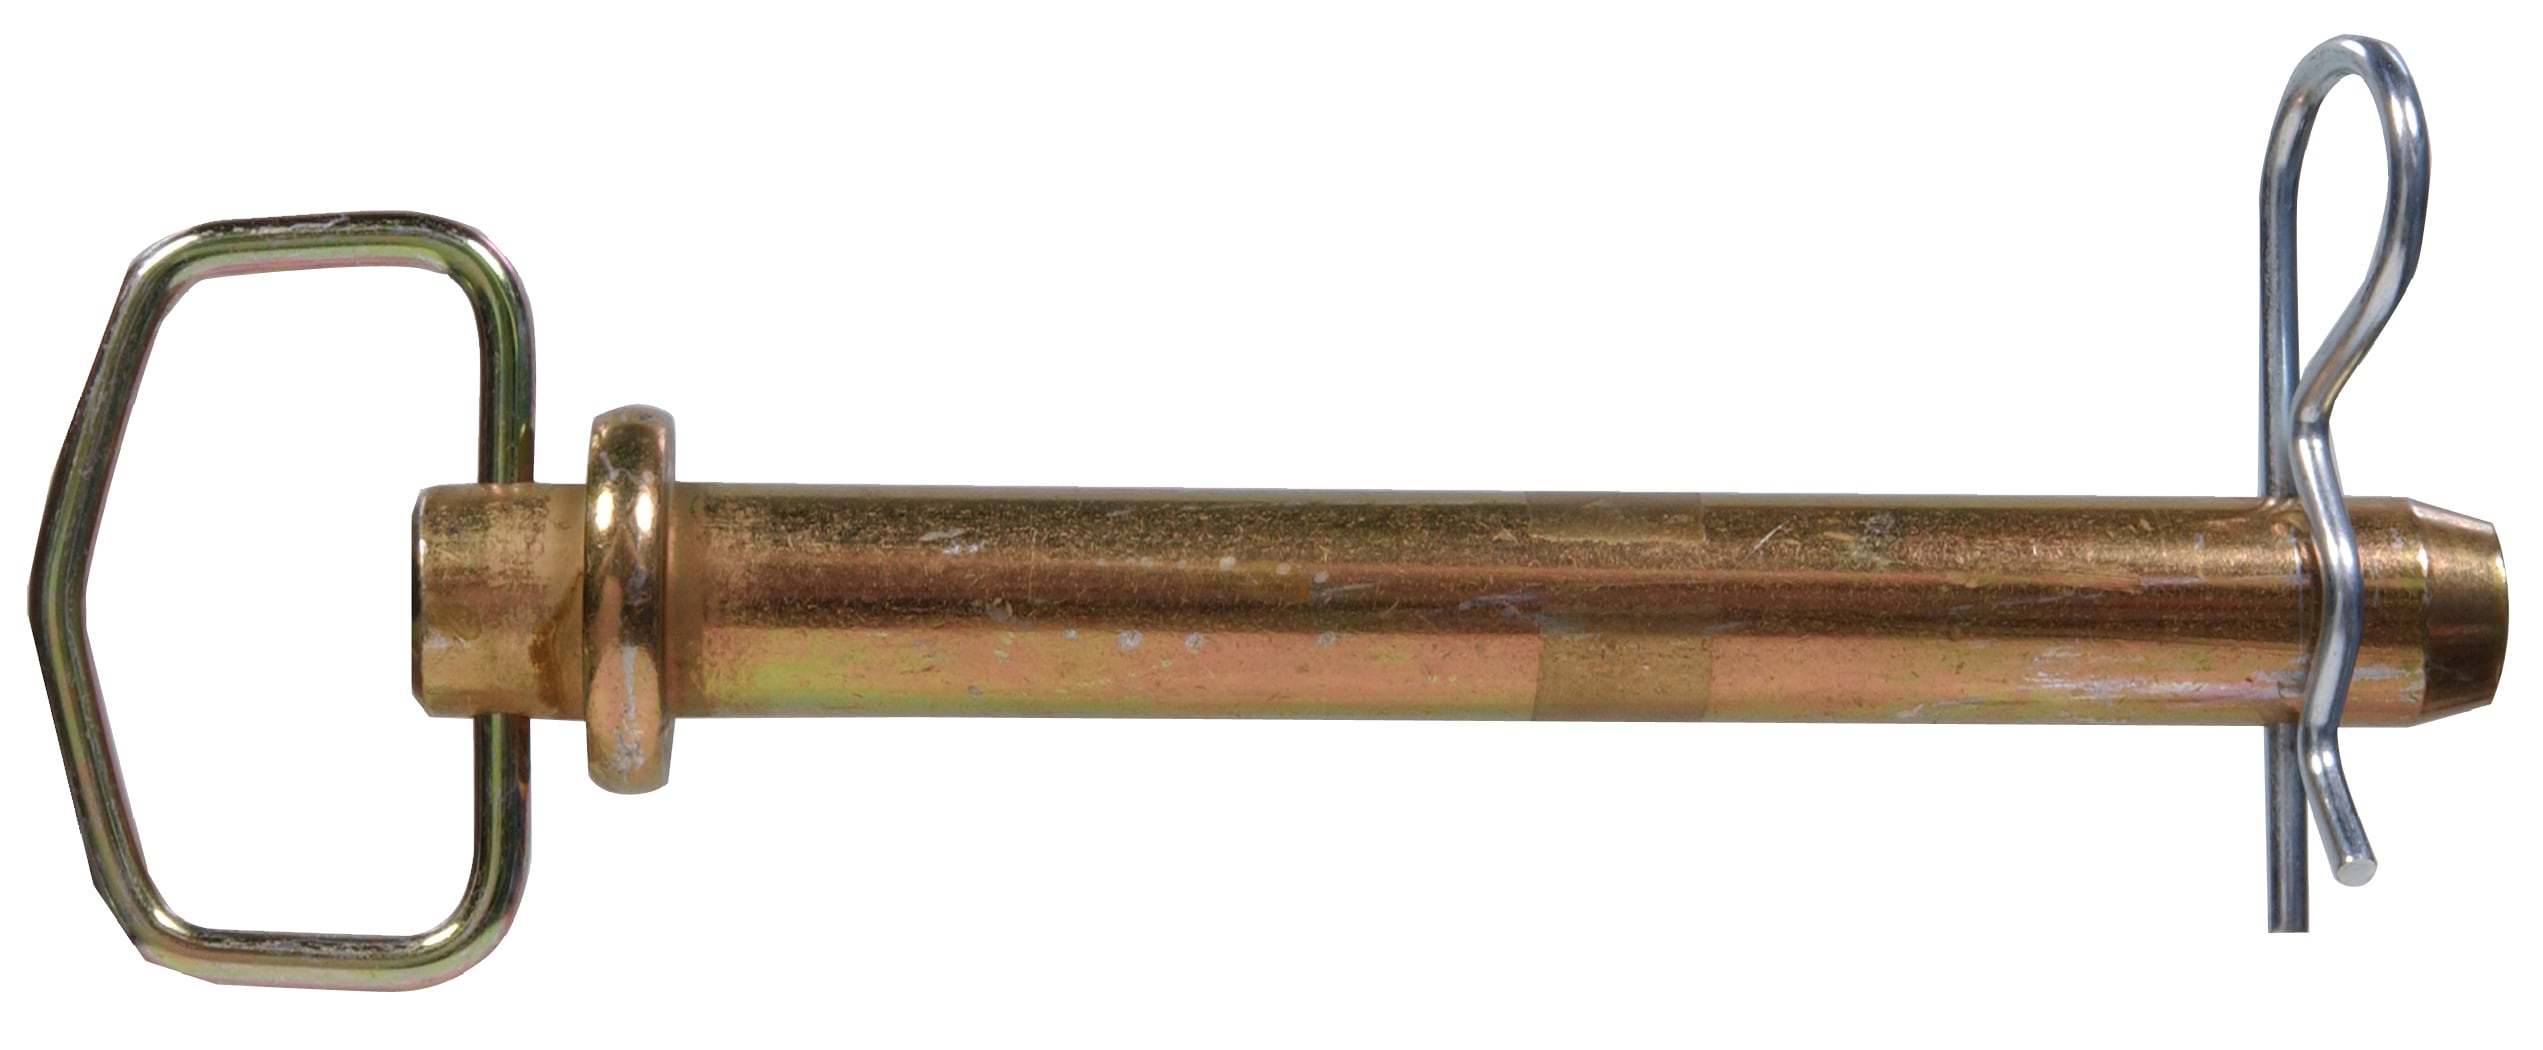 Hillman 2-in Silver Round Wire Lock Pin/Clip in the Specialty